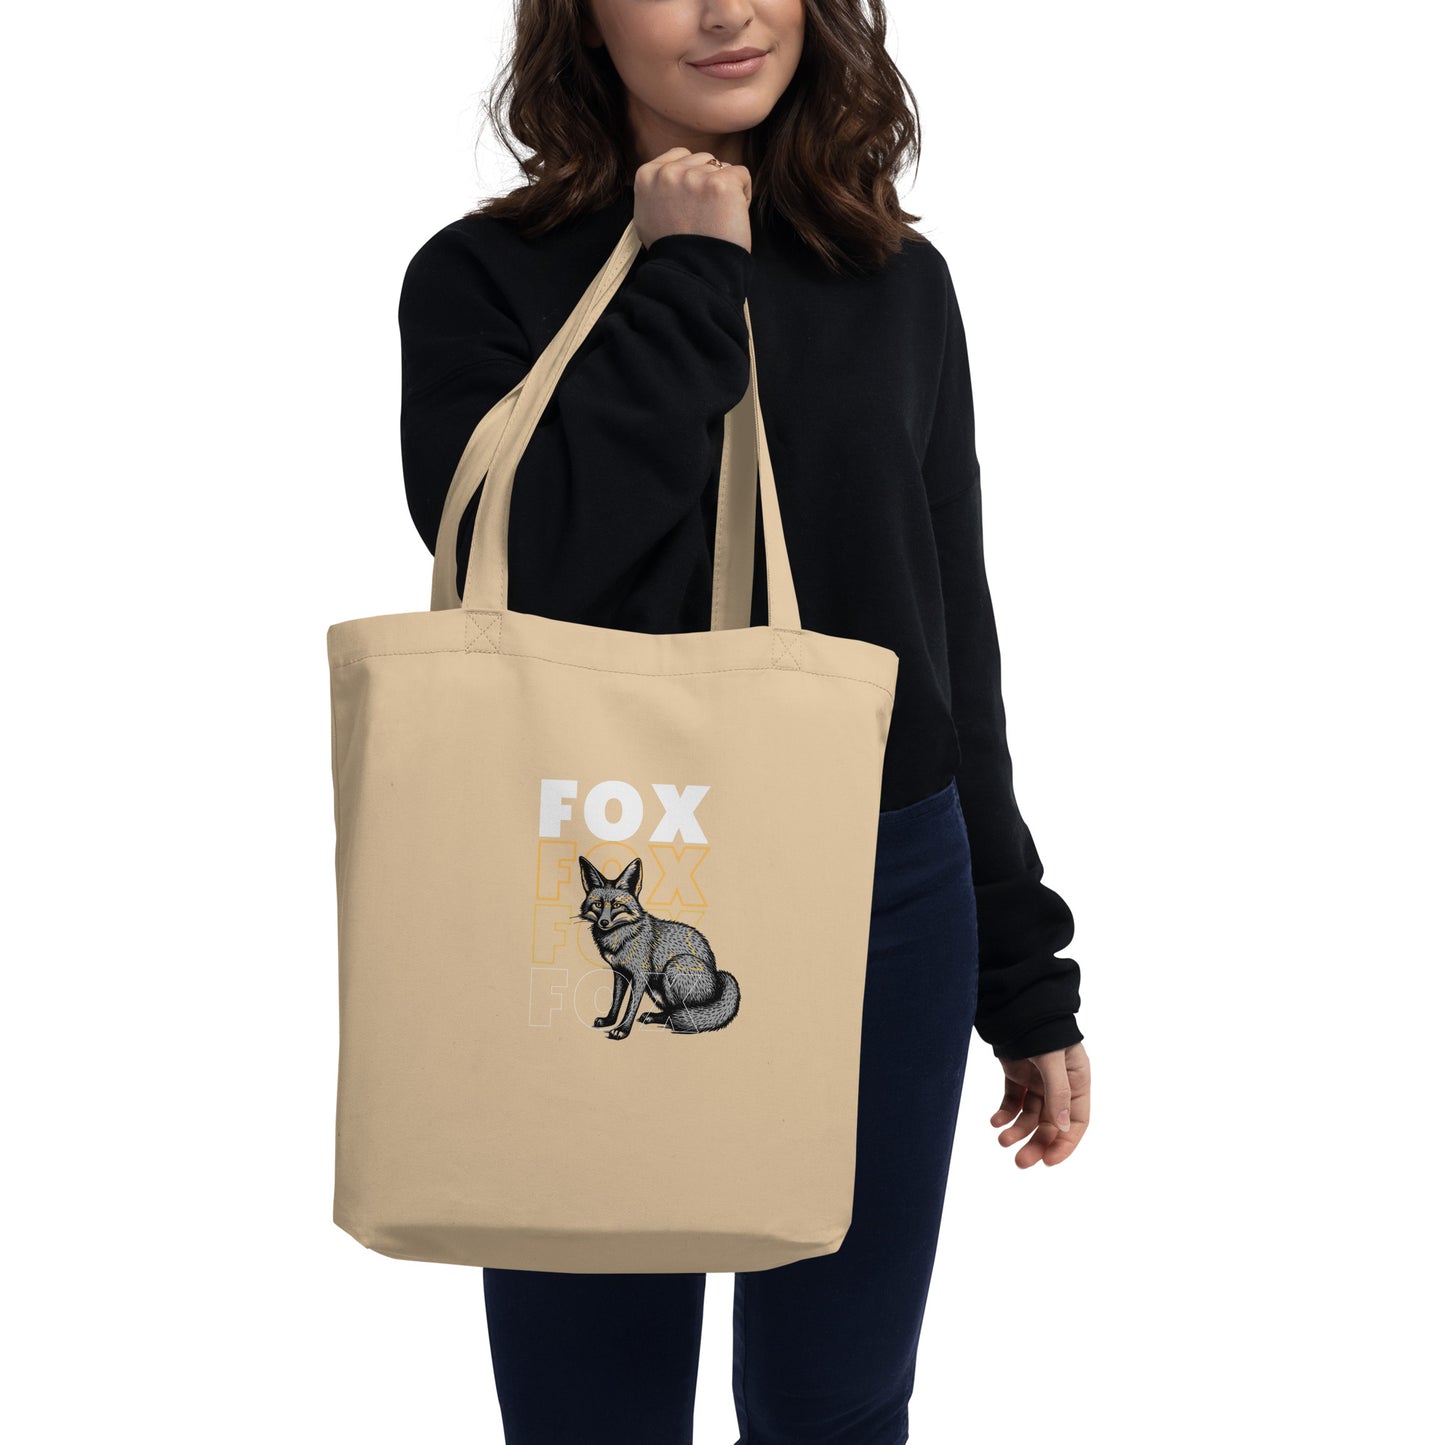 Fox Eco Tote Bag